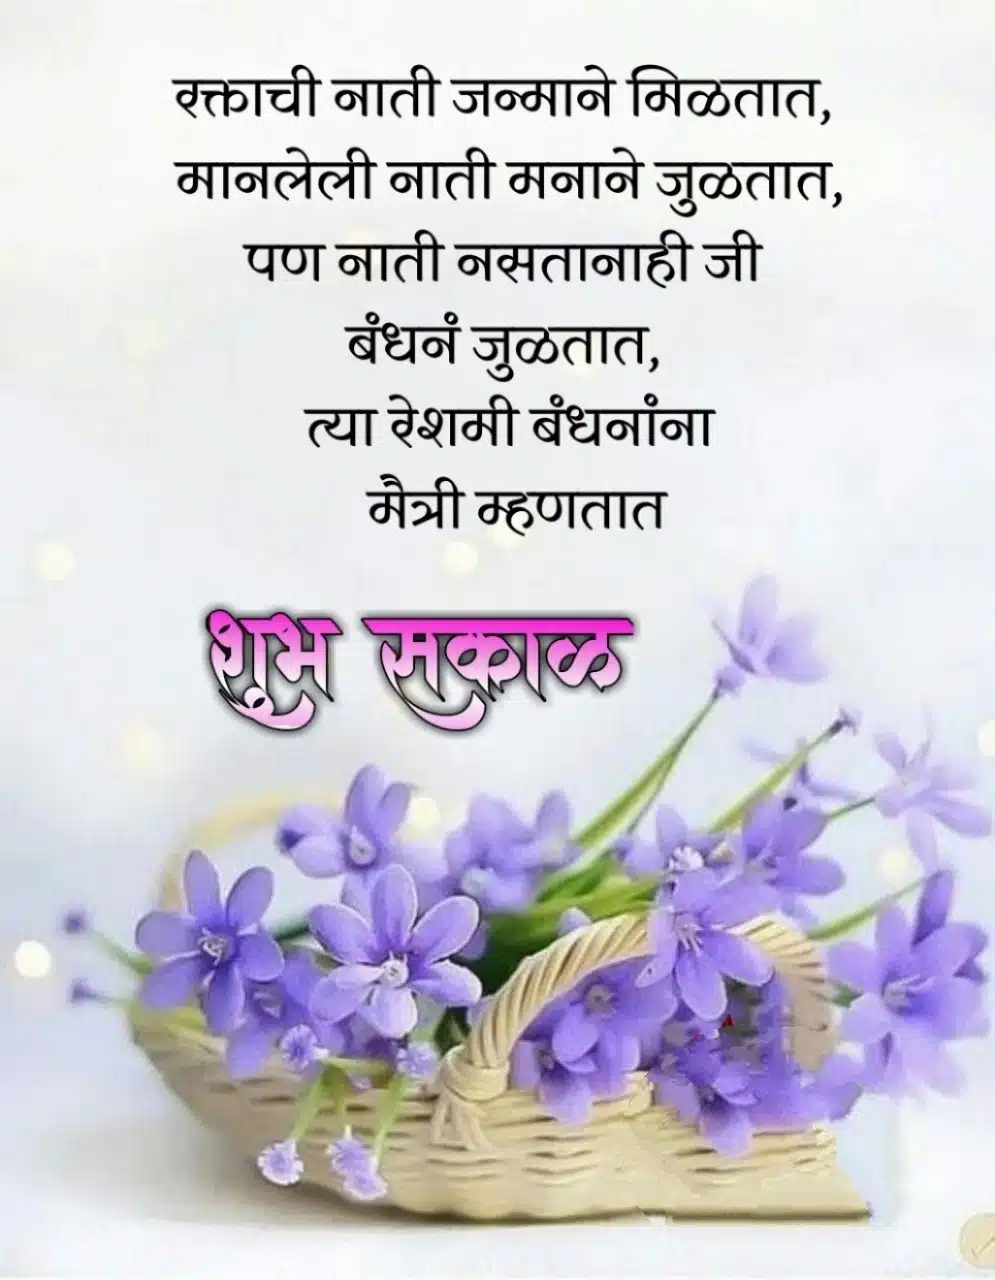 Good Morning For Friends In Marathi, Friend Good Morning images in Marathi